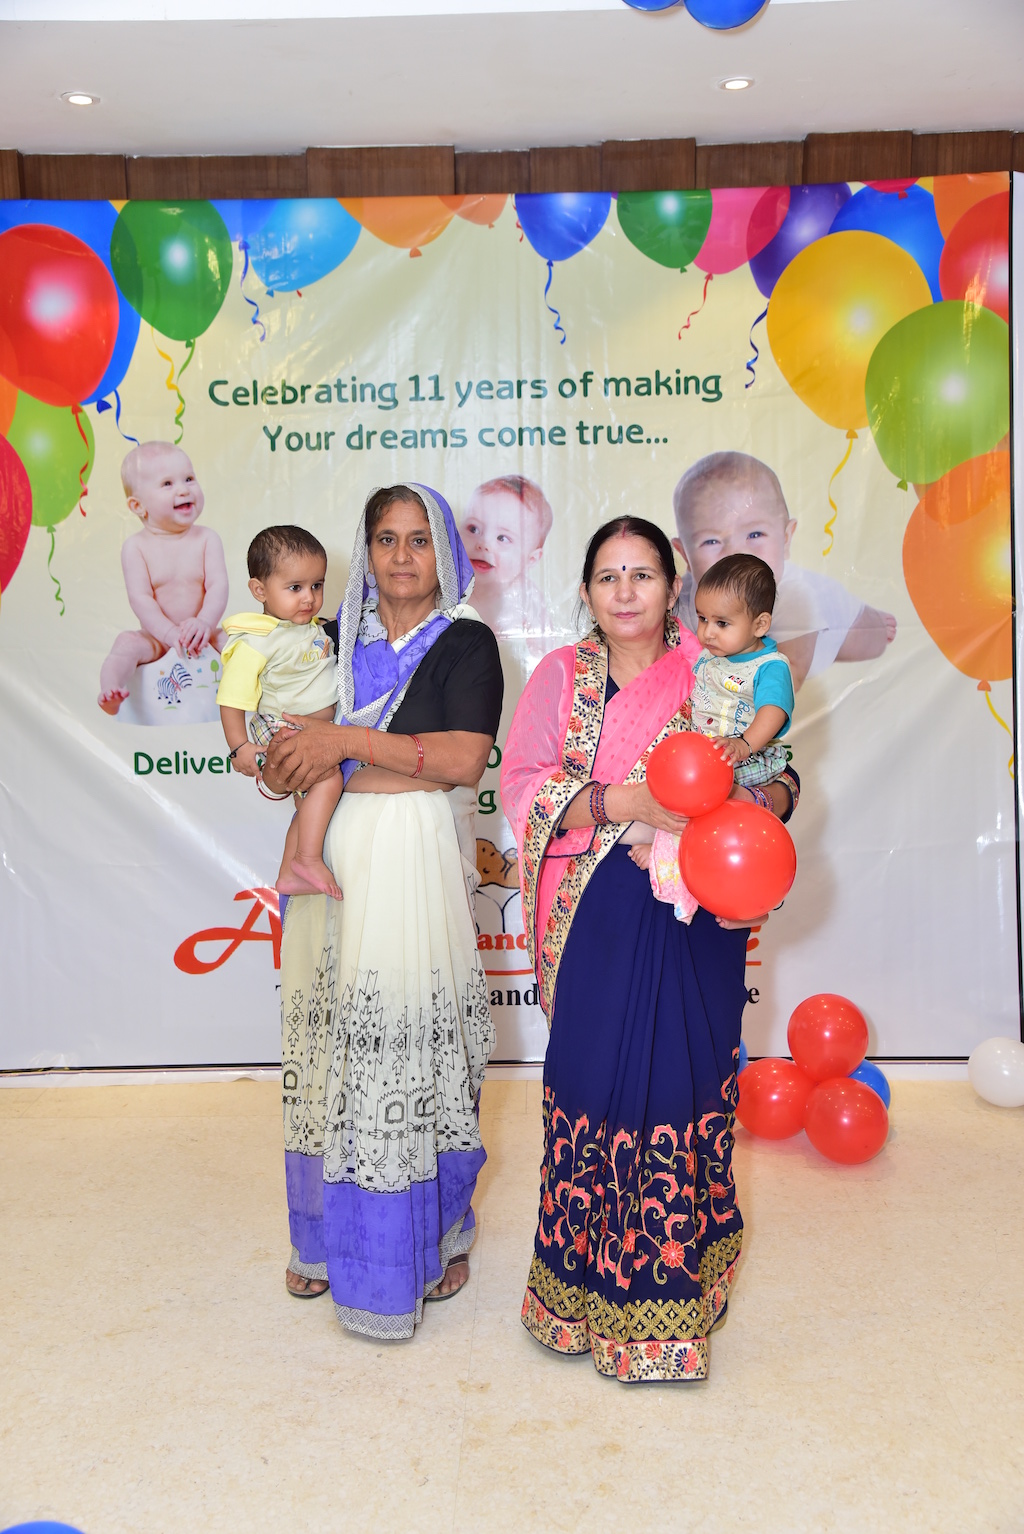 Best IVF Clinic Noida, Test Tube Baby Center in Noida, Infertility Treatment in Noida, IVF Centre in Noida, Fertility Centre in Noida, IVF Doctor in Noida, IVF Fertility Centre in Noida